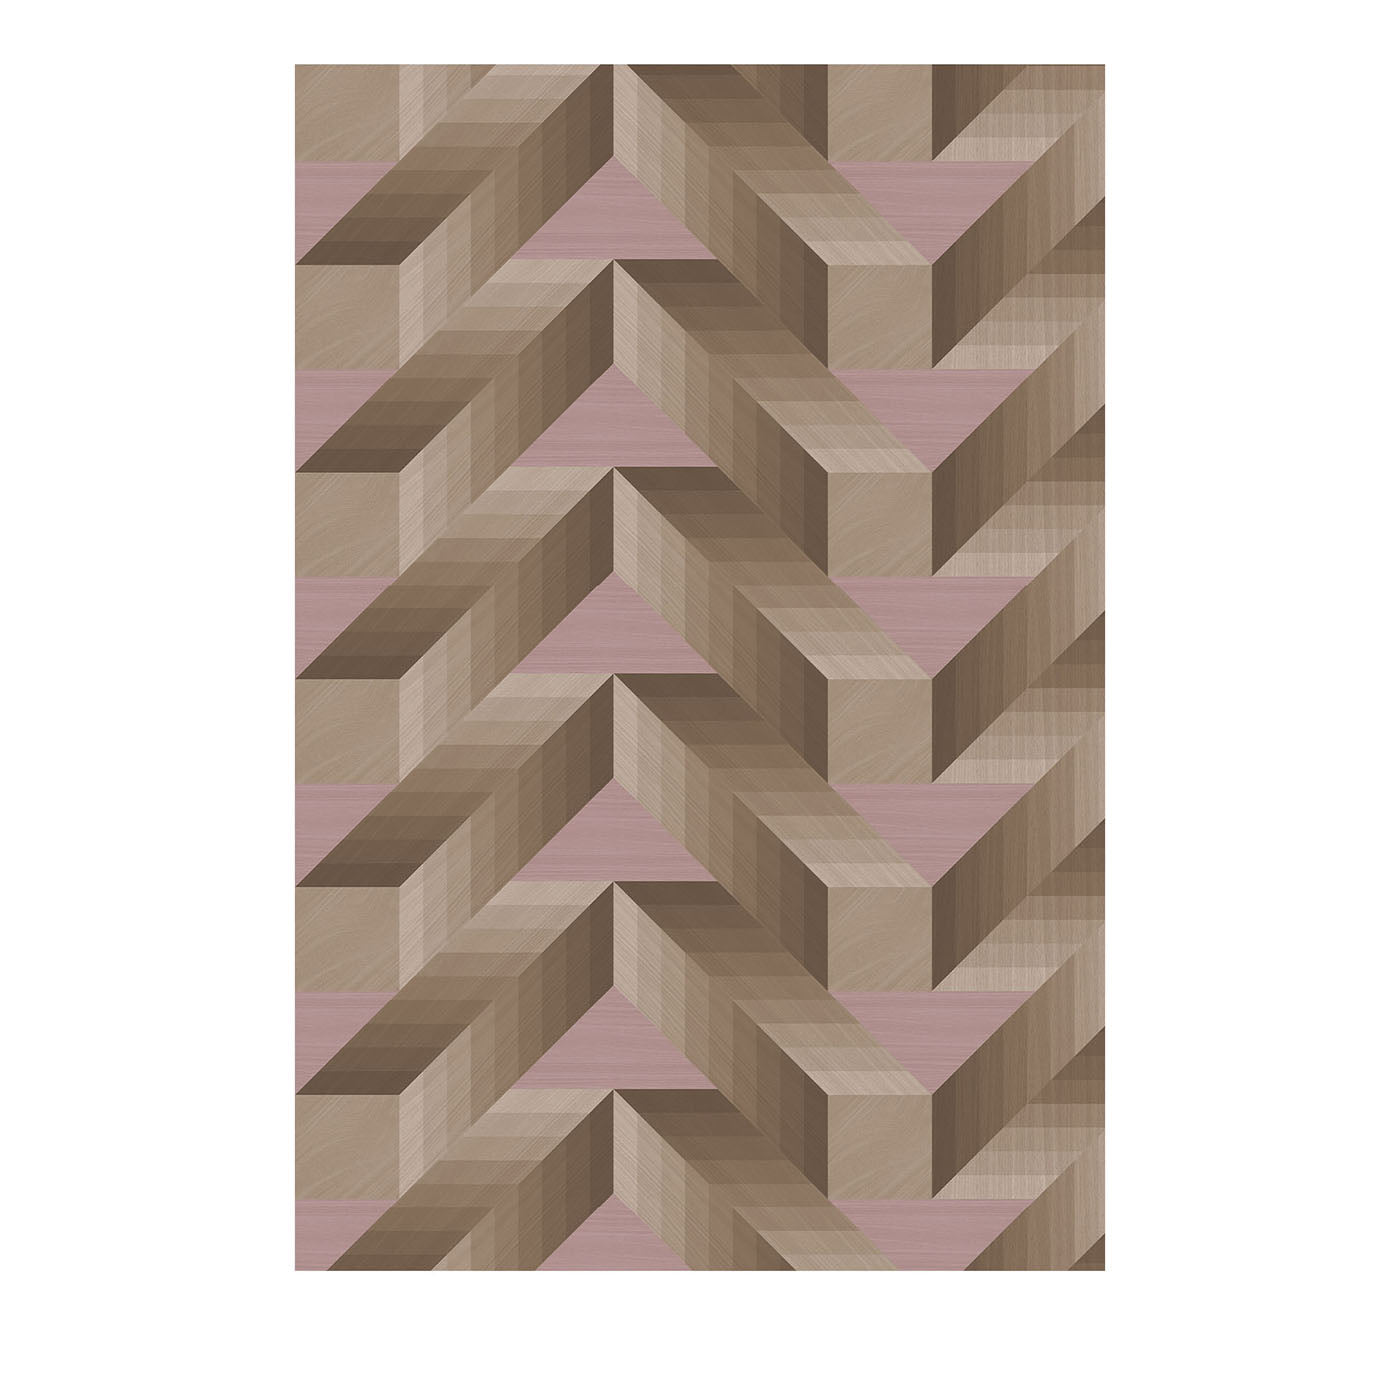 Geometry Cubes Chocolate Wallpaper - Main view